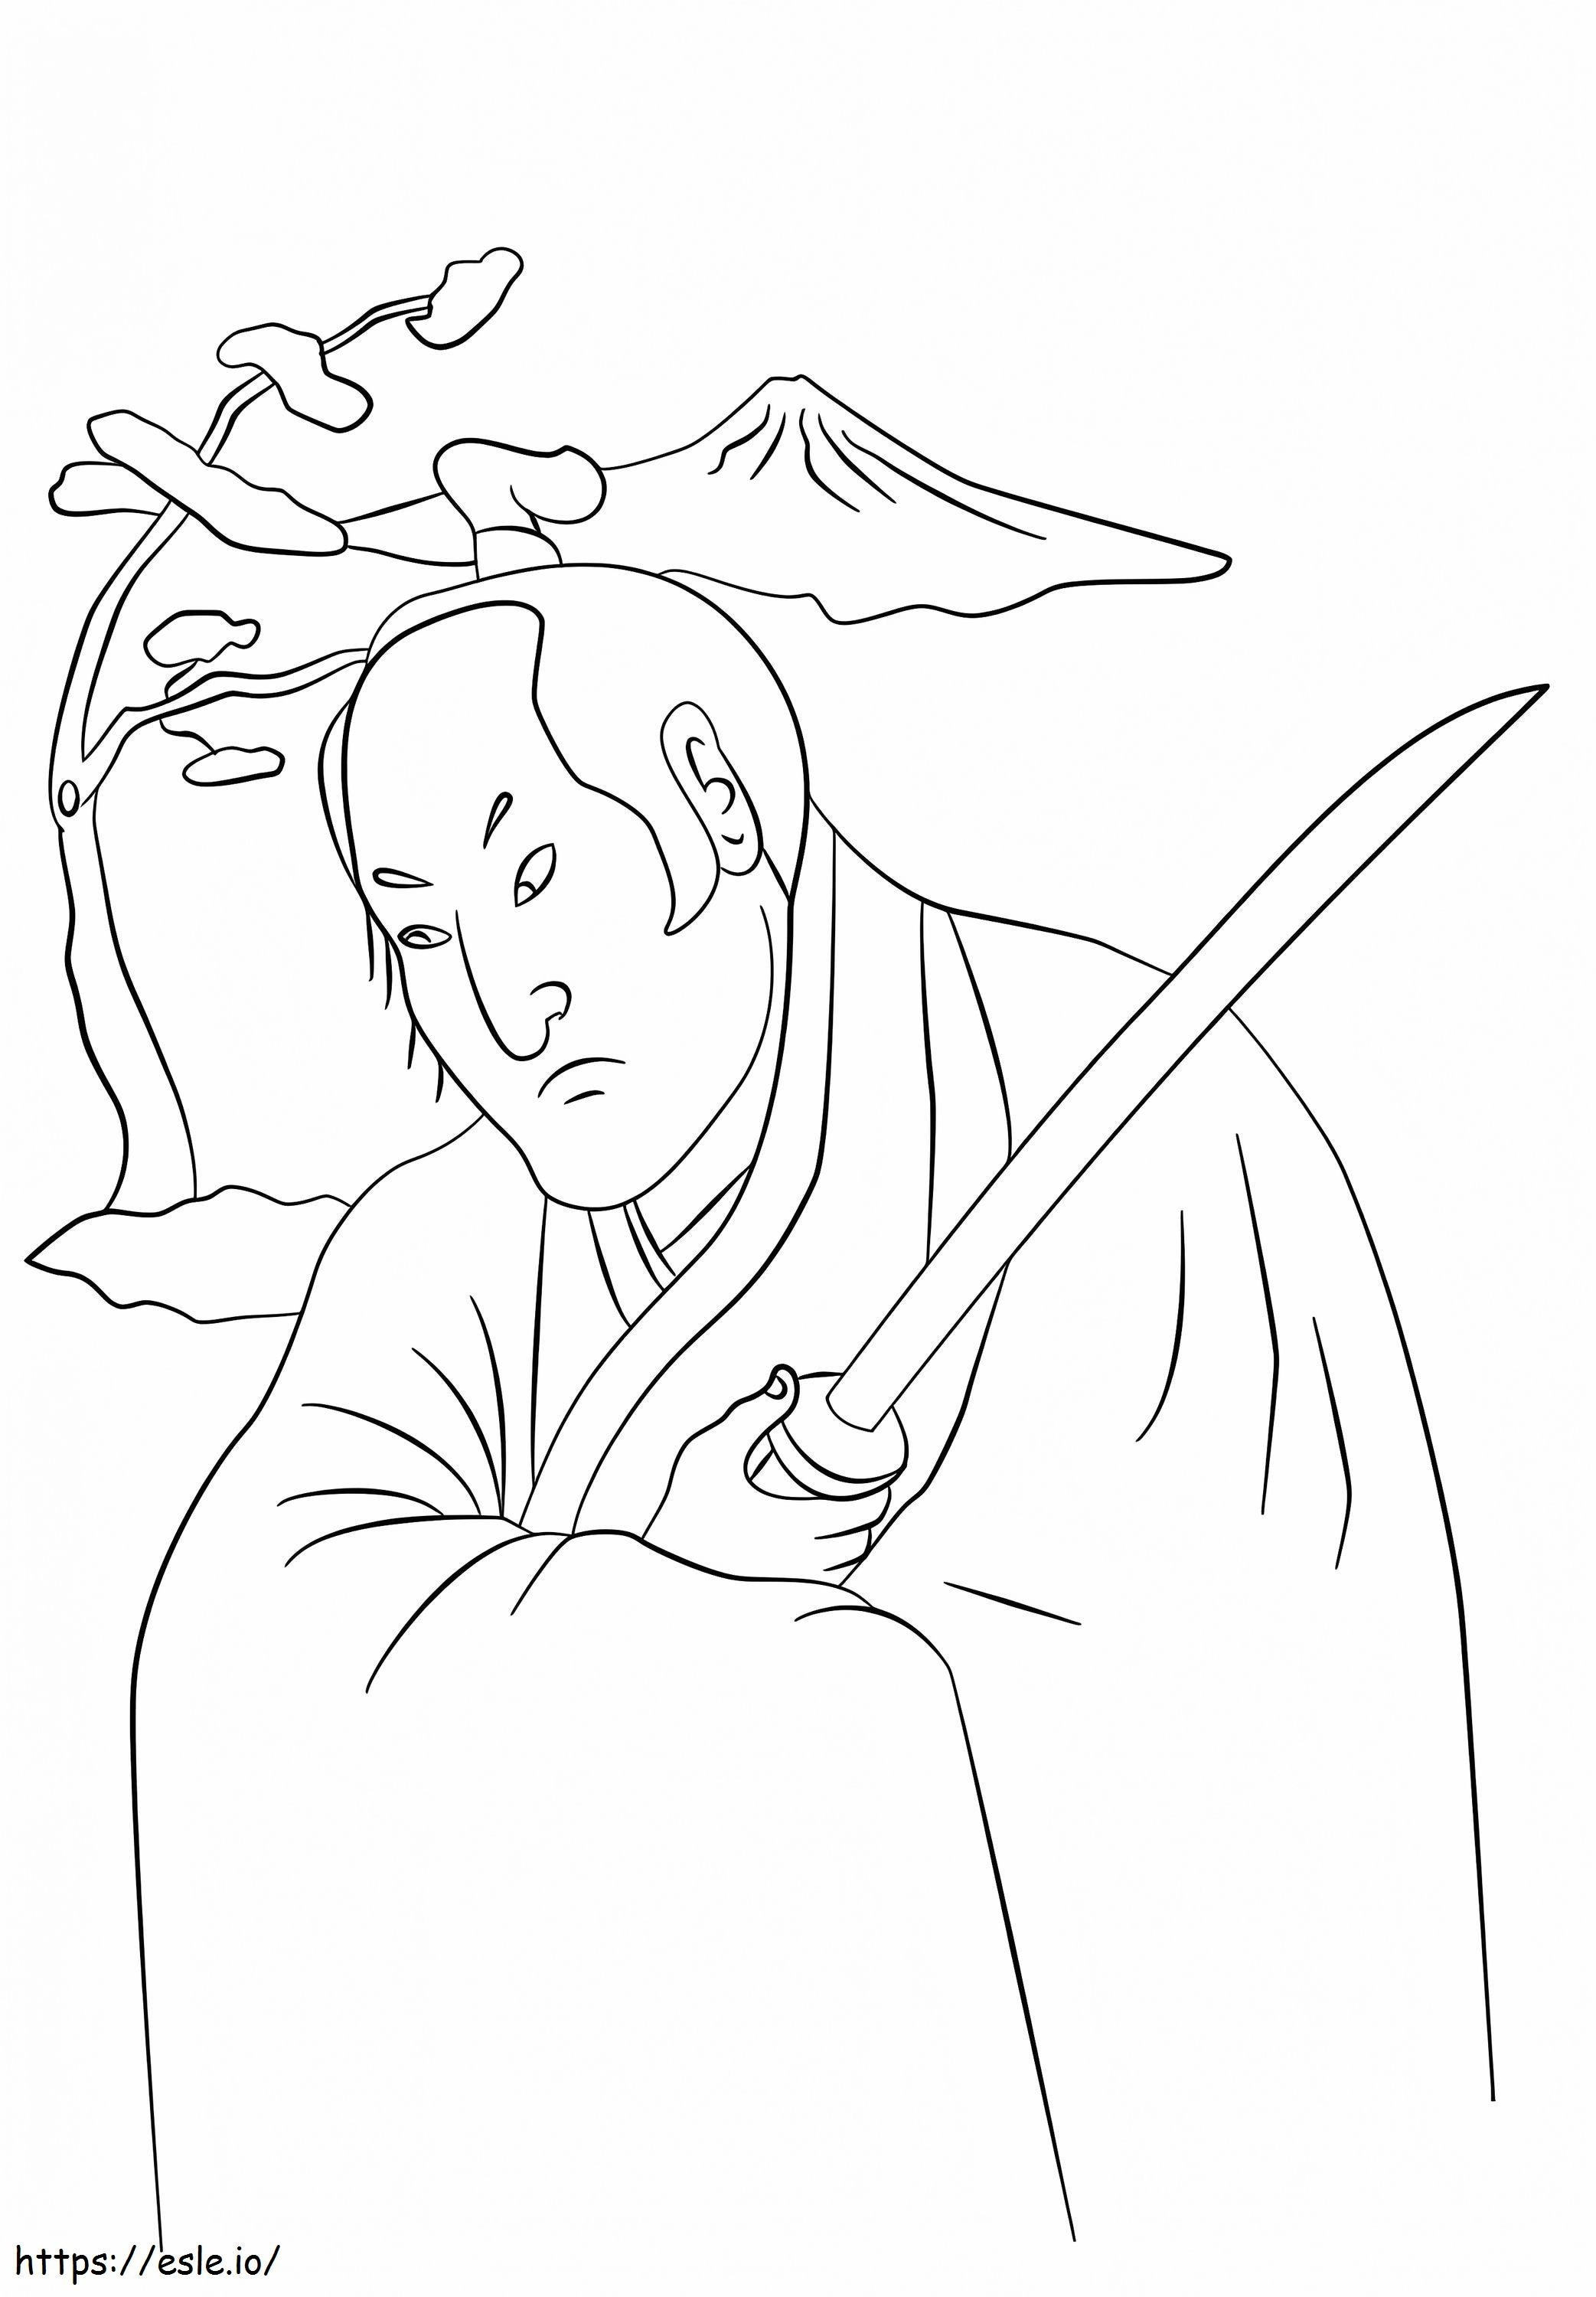 Guerrero Samurai coloring page